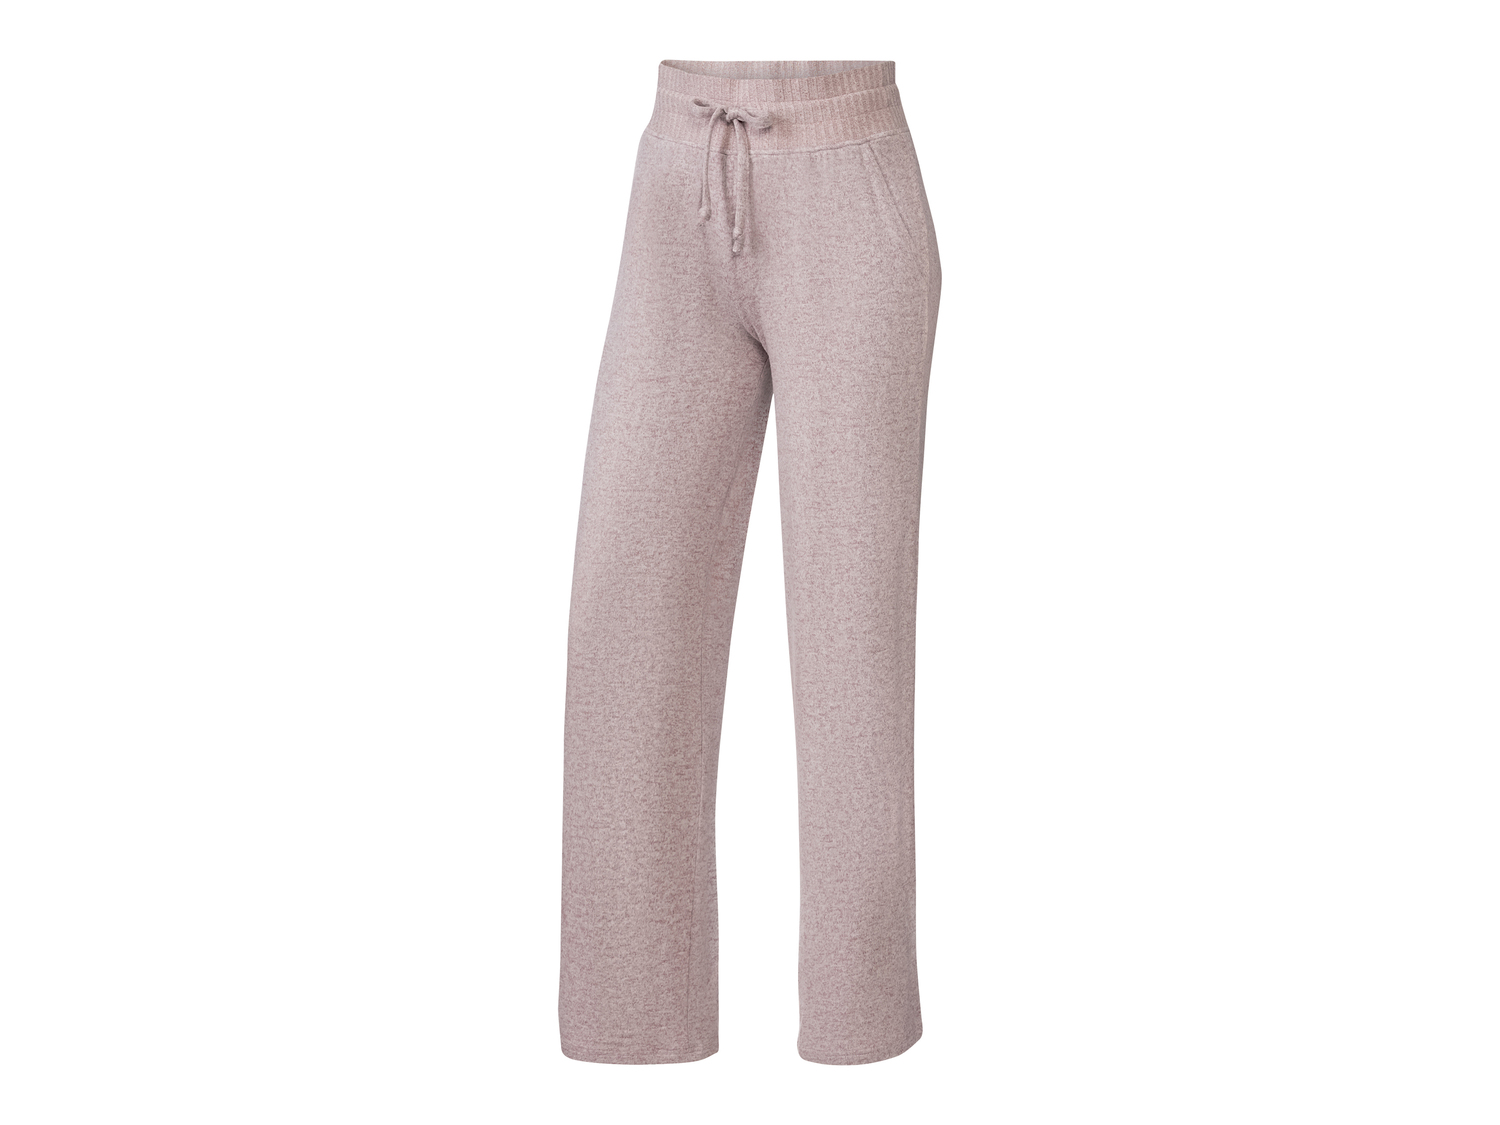 Pantaloni sportivi da donna Crivit, prezzo 9.99 &#8364; 
Misure: S-L
Taglie ...